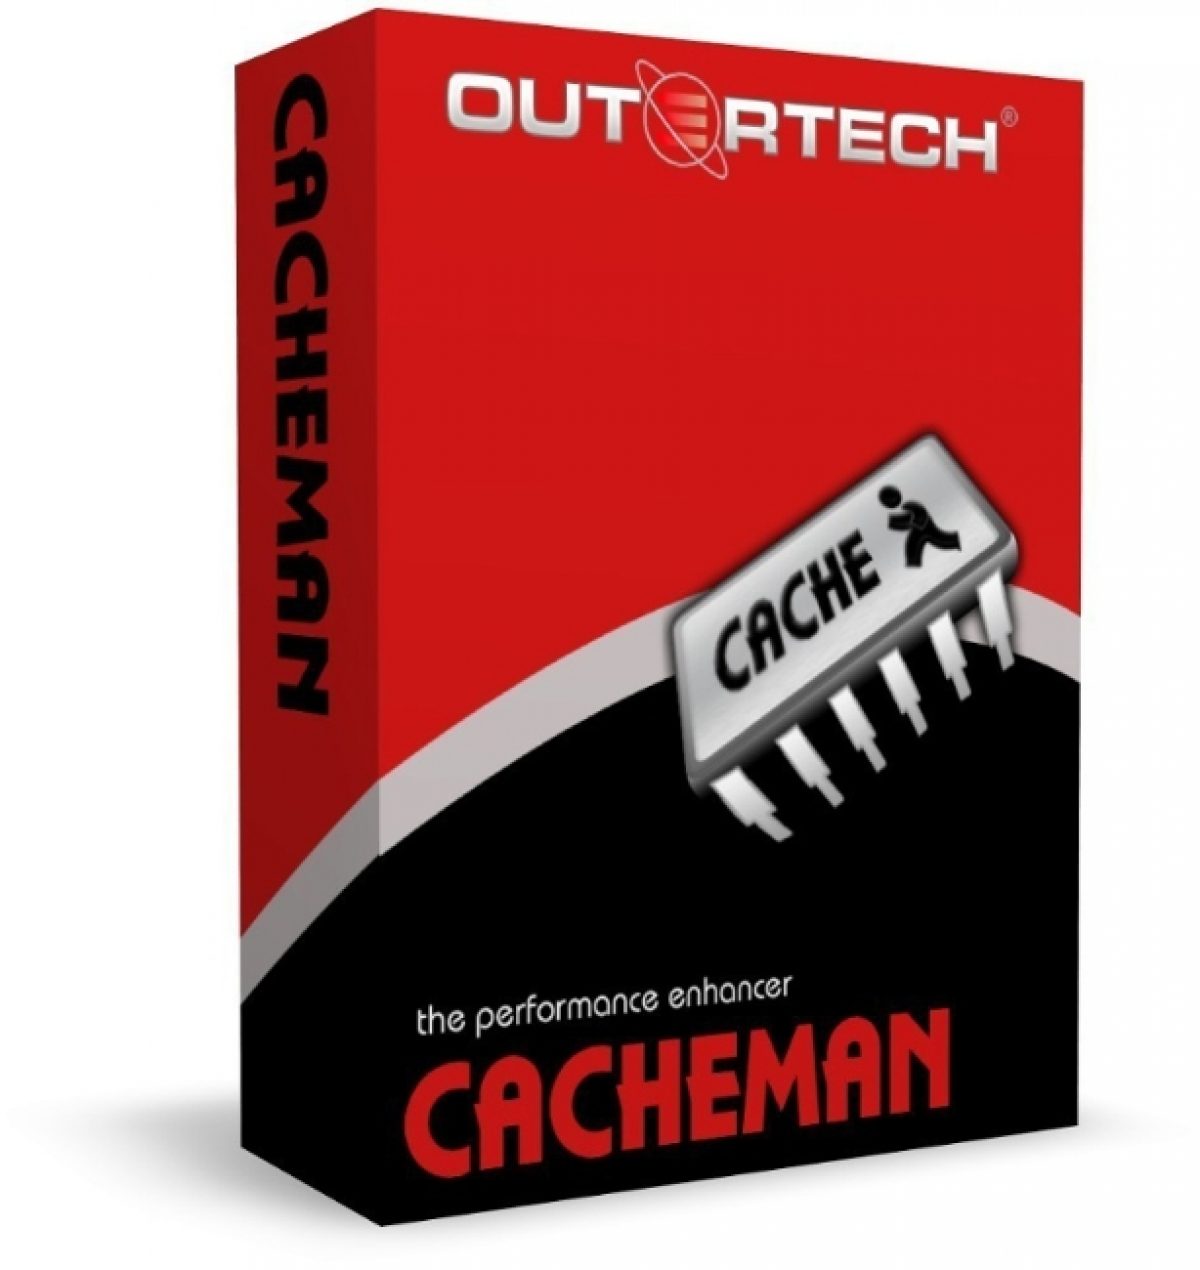 is cacheman free